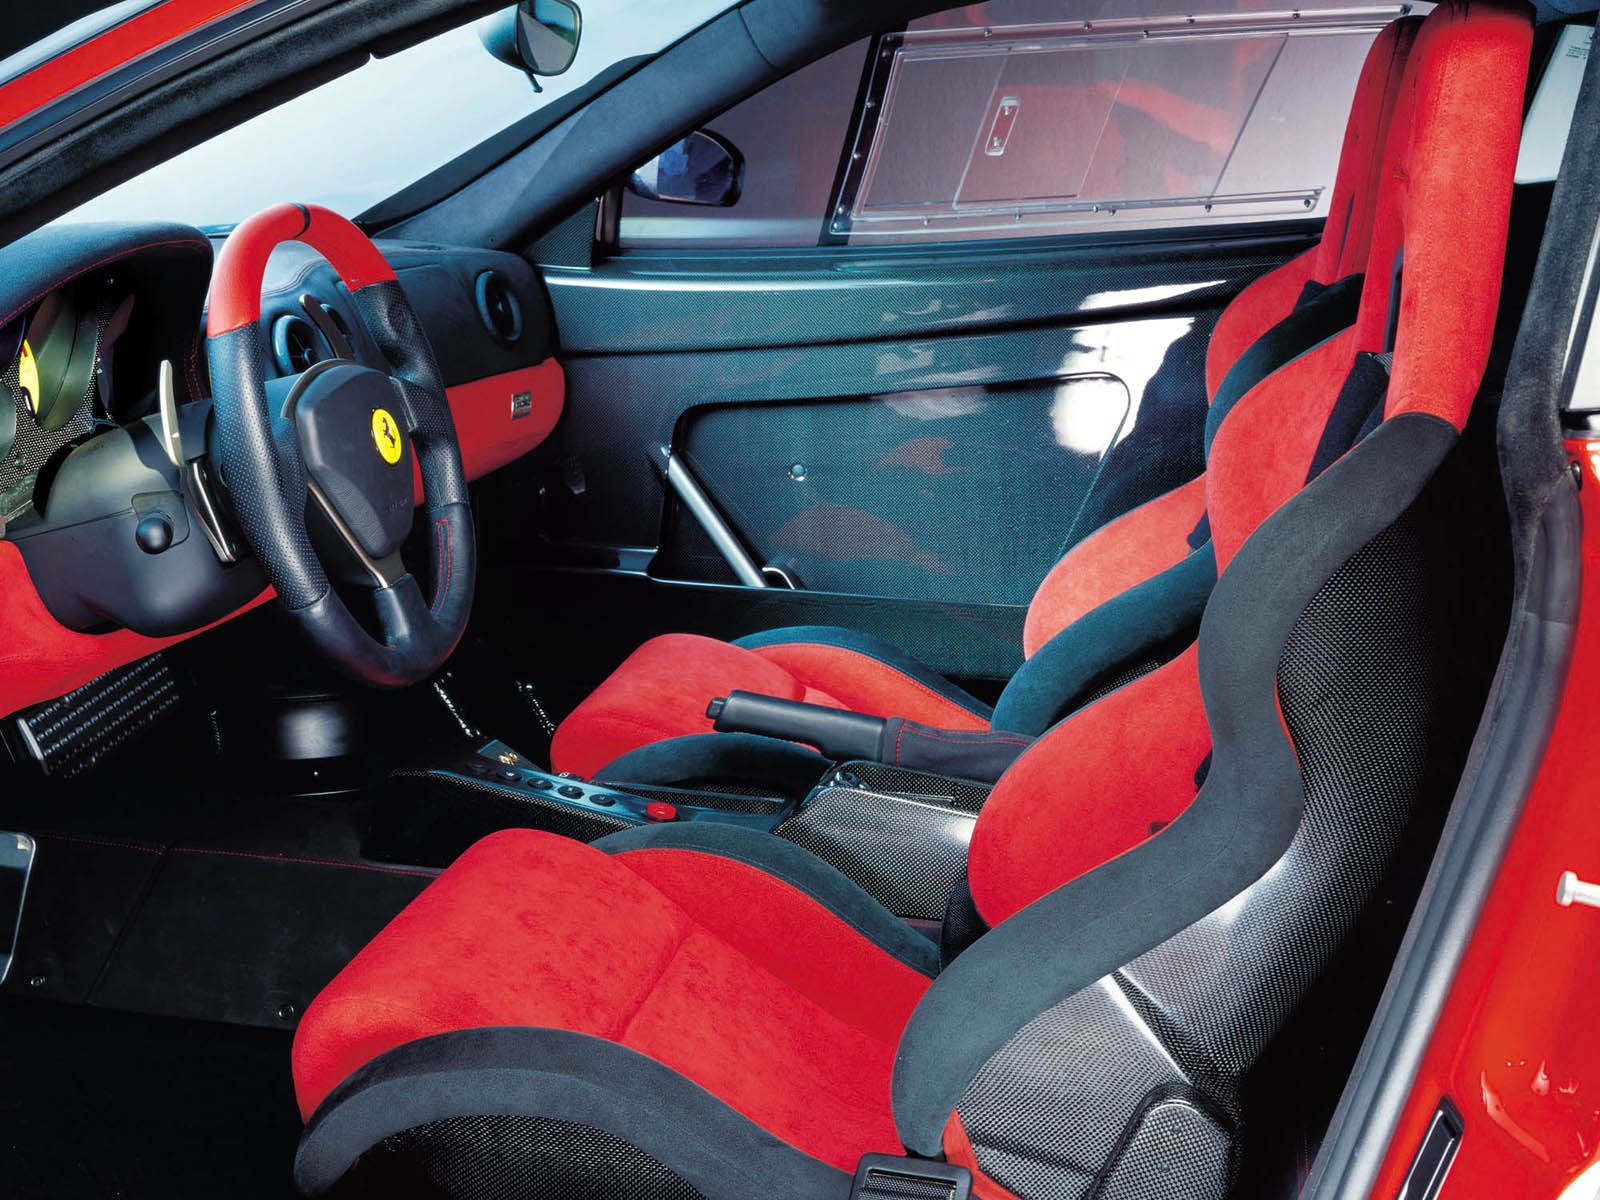 http://1.bp.blogspot.com/_uTGKd6u5pJ4/TRwyu4WZMYI/AAAAAAAAAQg/ISMWABPHoY8/s1600/Ferrari-360-Modena-Interior-Wallpaper.jpg